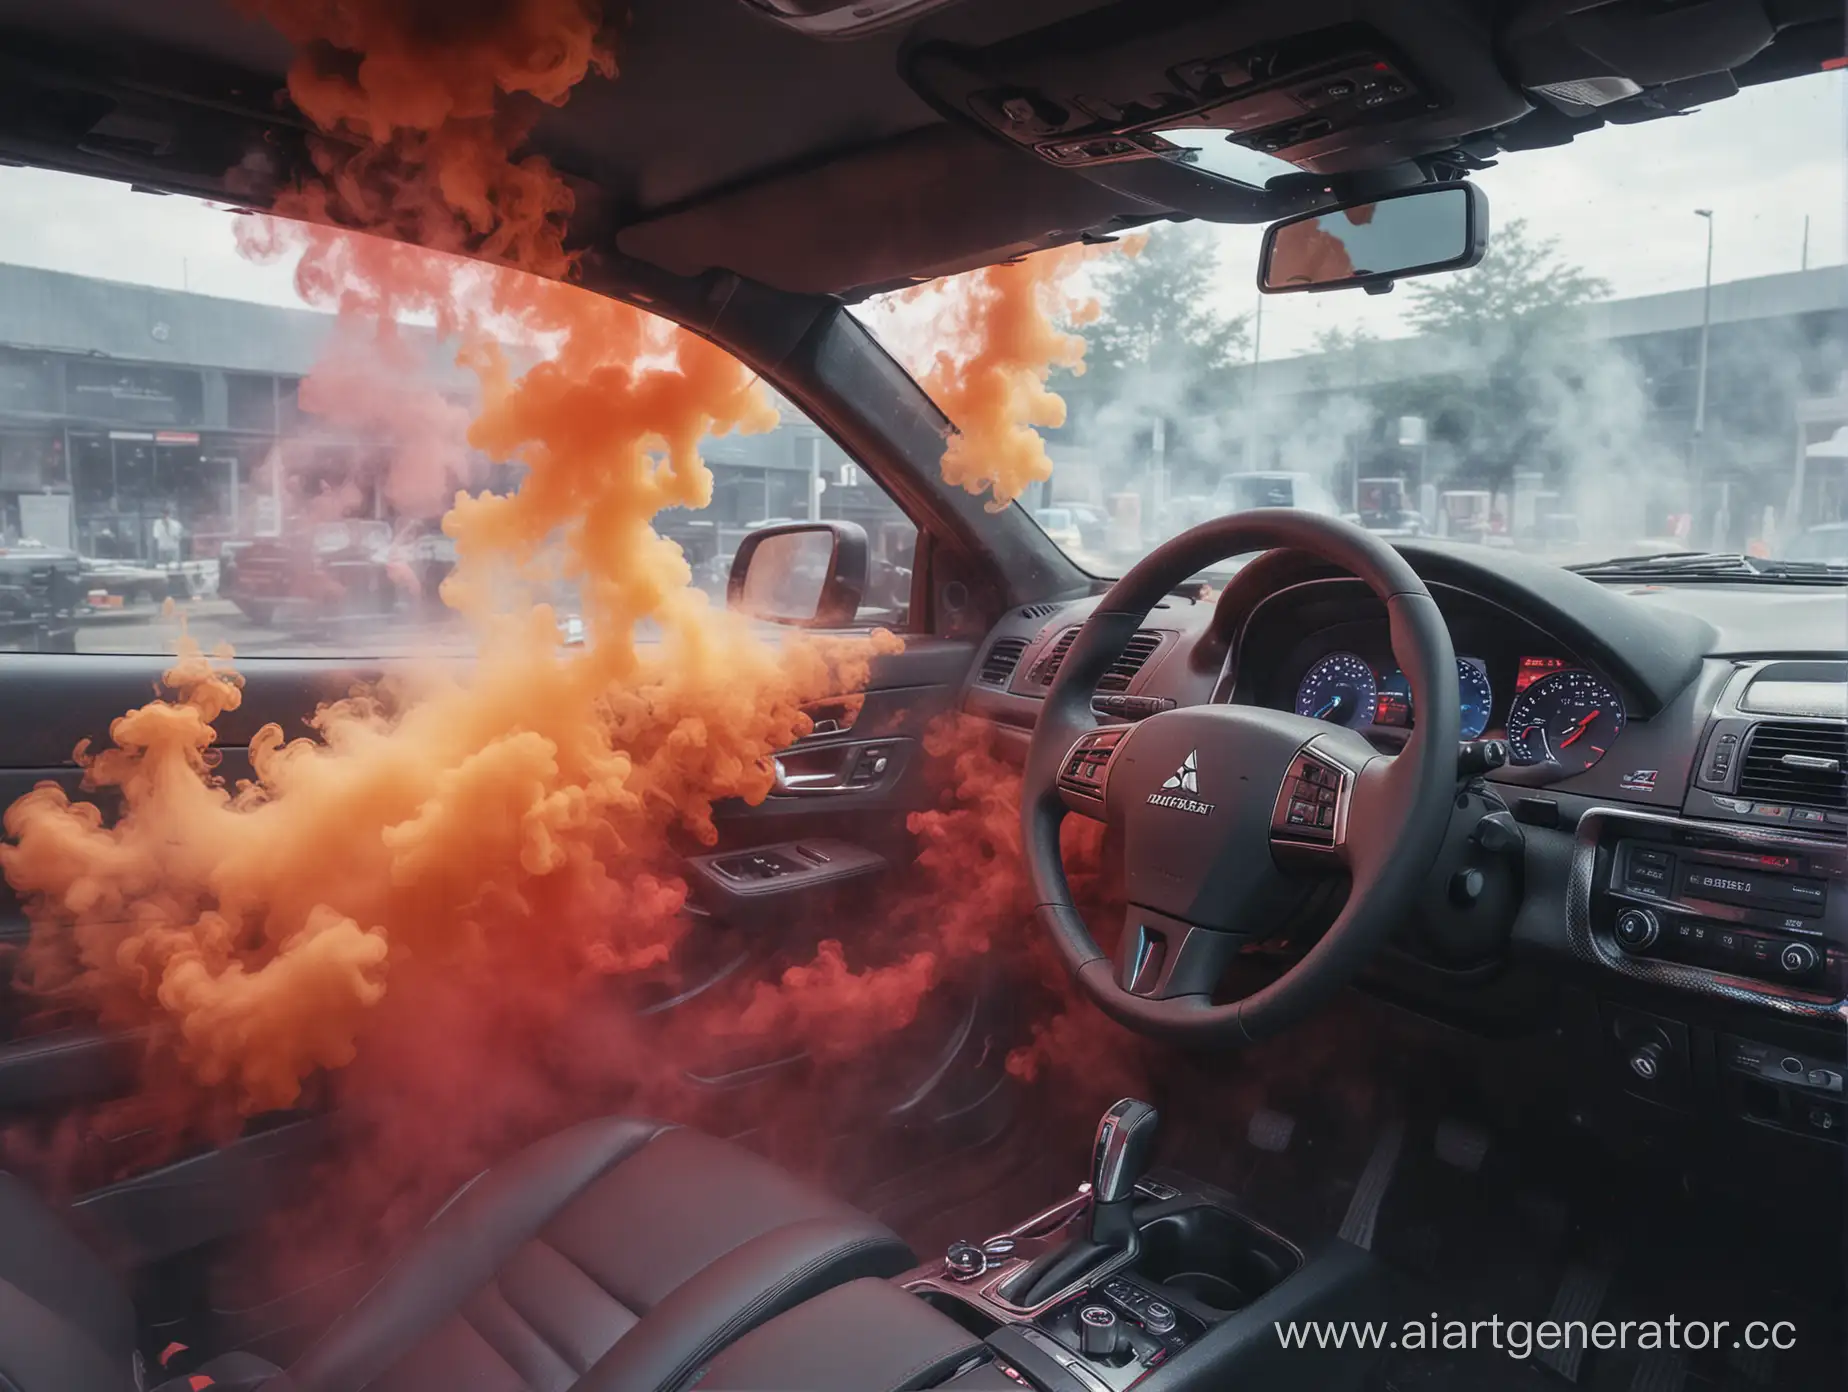 Vibrant-Mitsubishi-Car-Salon-with-Detailed-Multimedia-Display-amidst-Colorful-Smoke